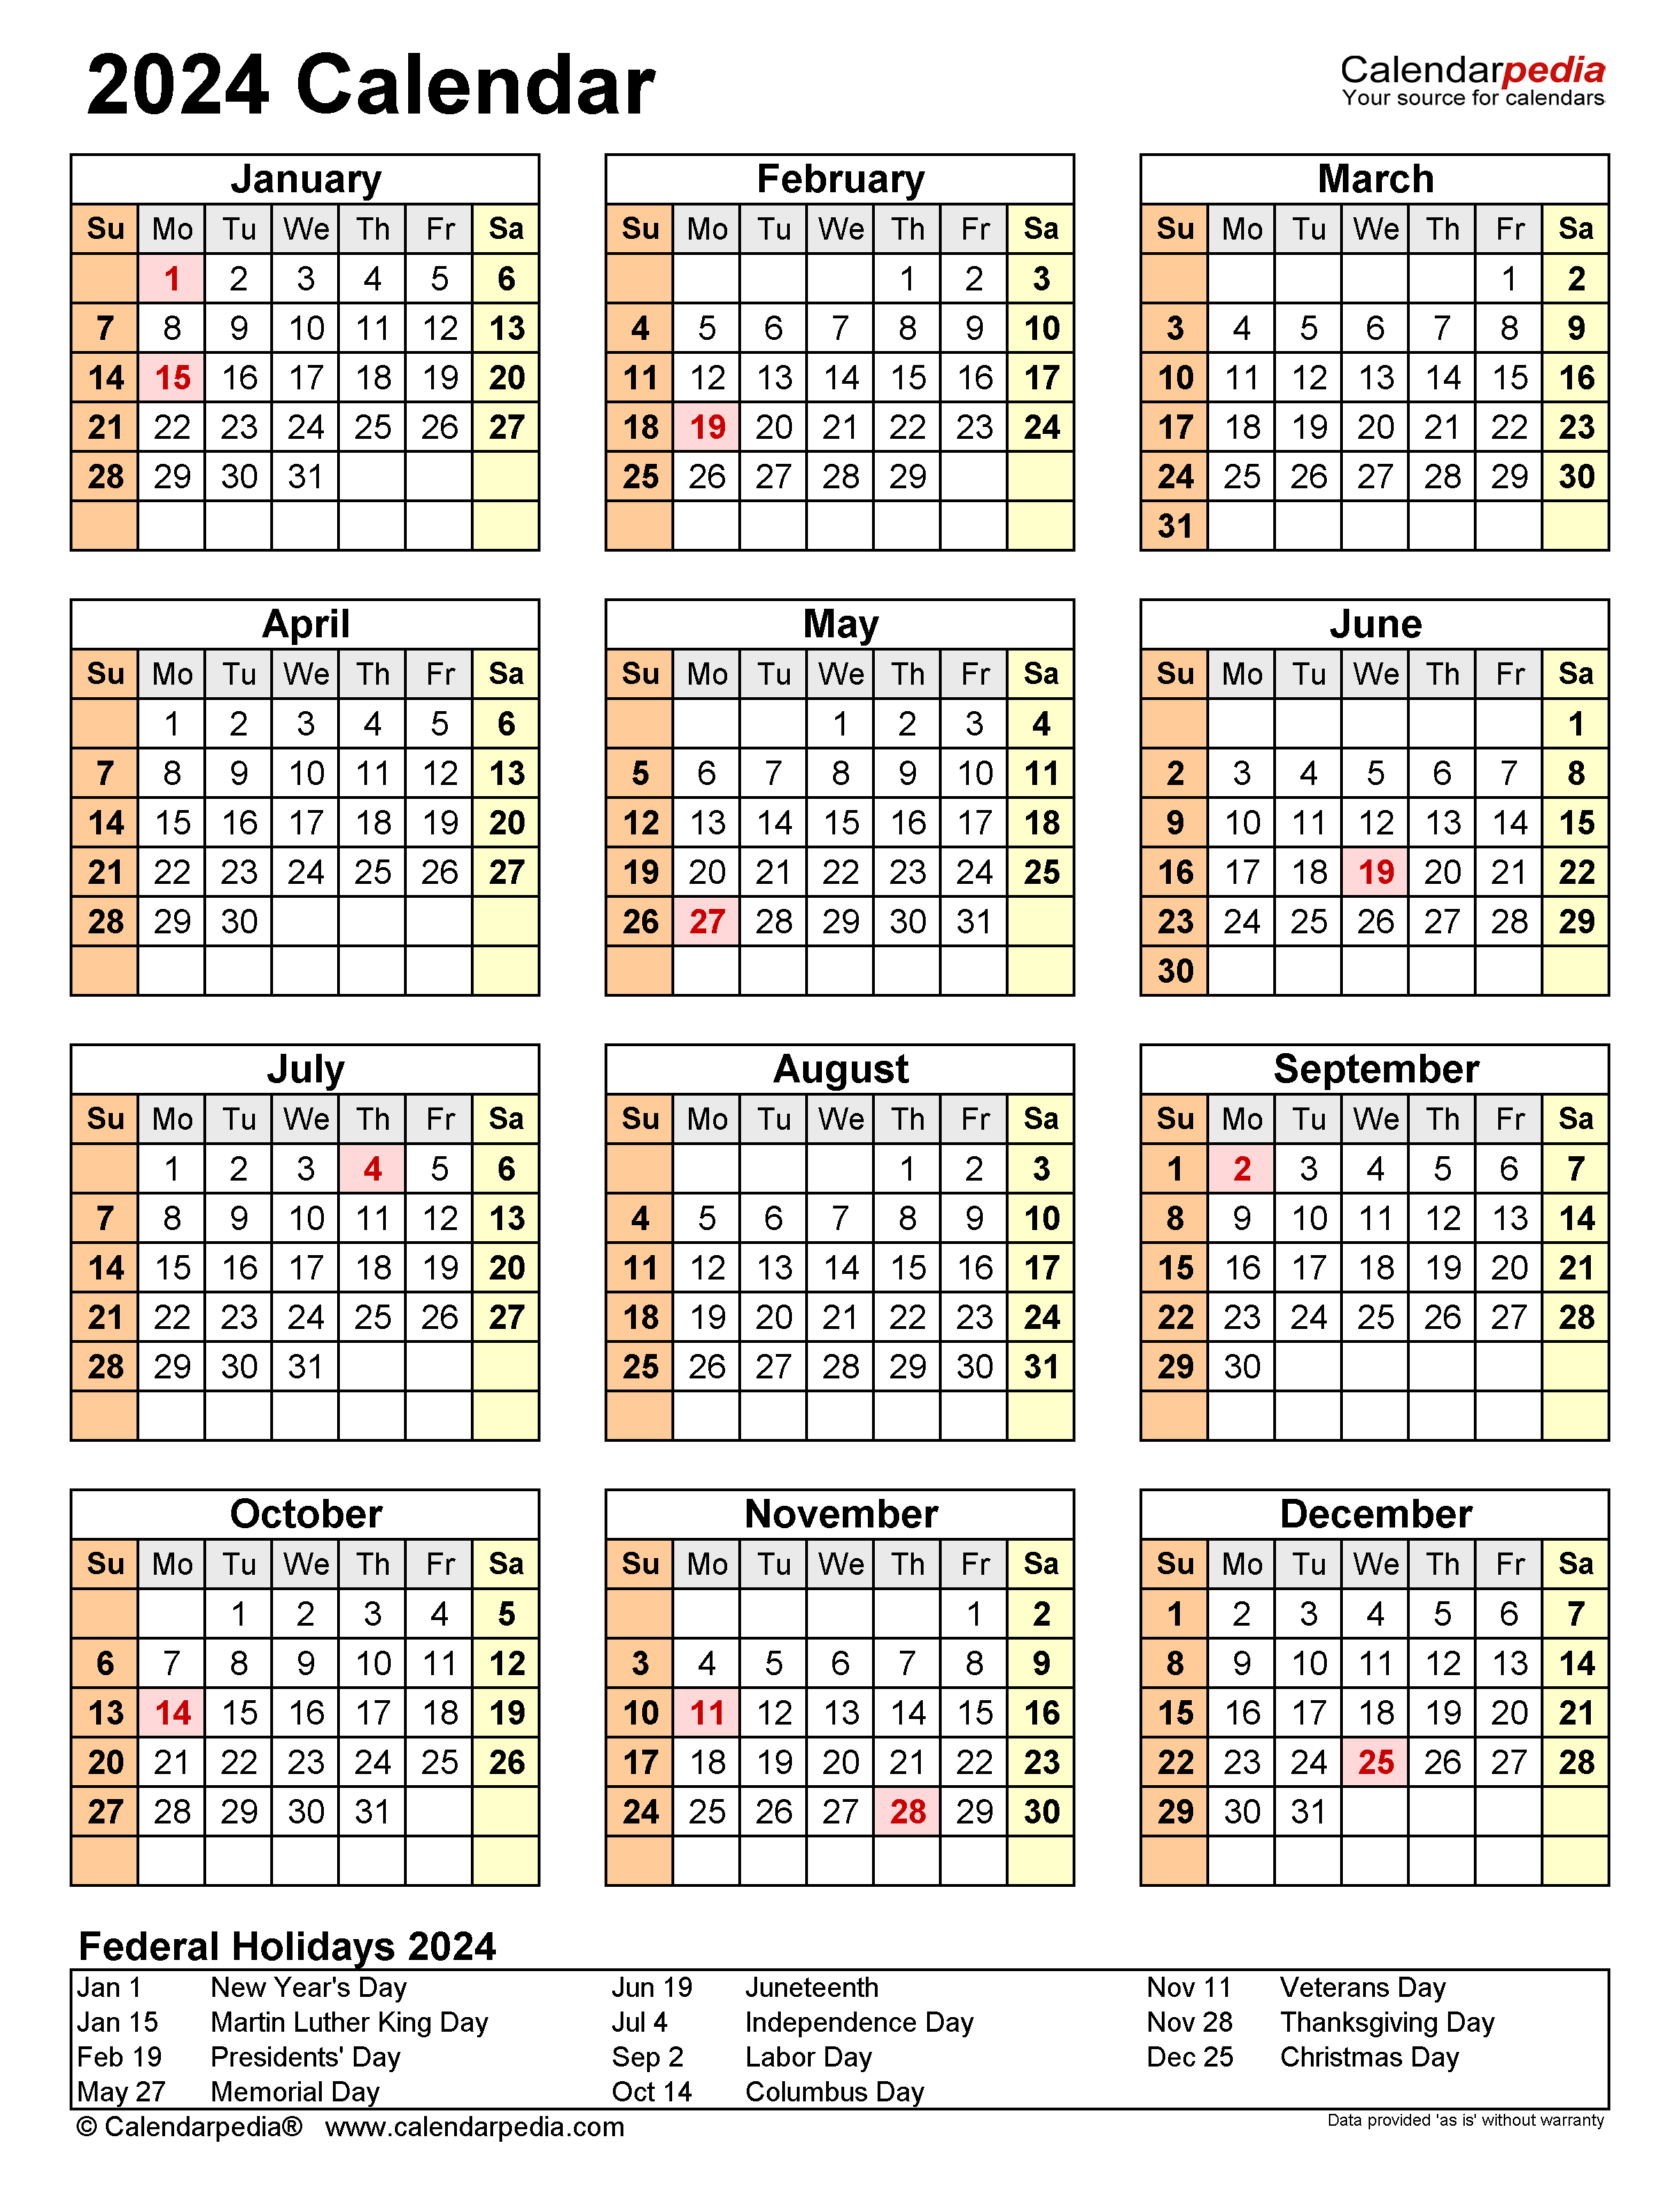 Free Printable 2024 Calendar With Holidays Crownflourmills - Free Printable 2024 Calendar With Holidays Nz